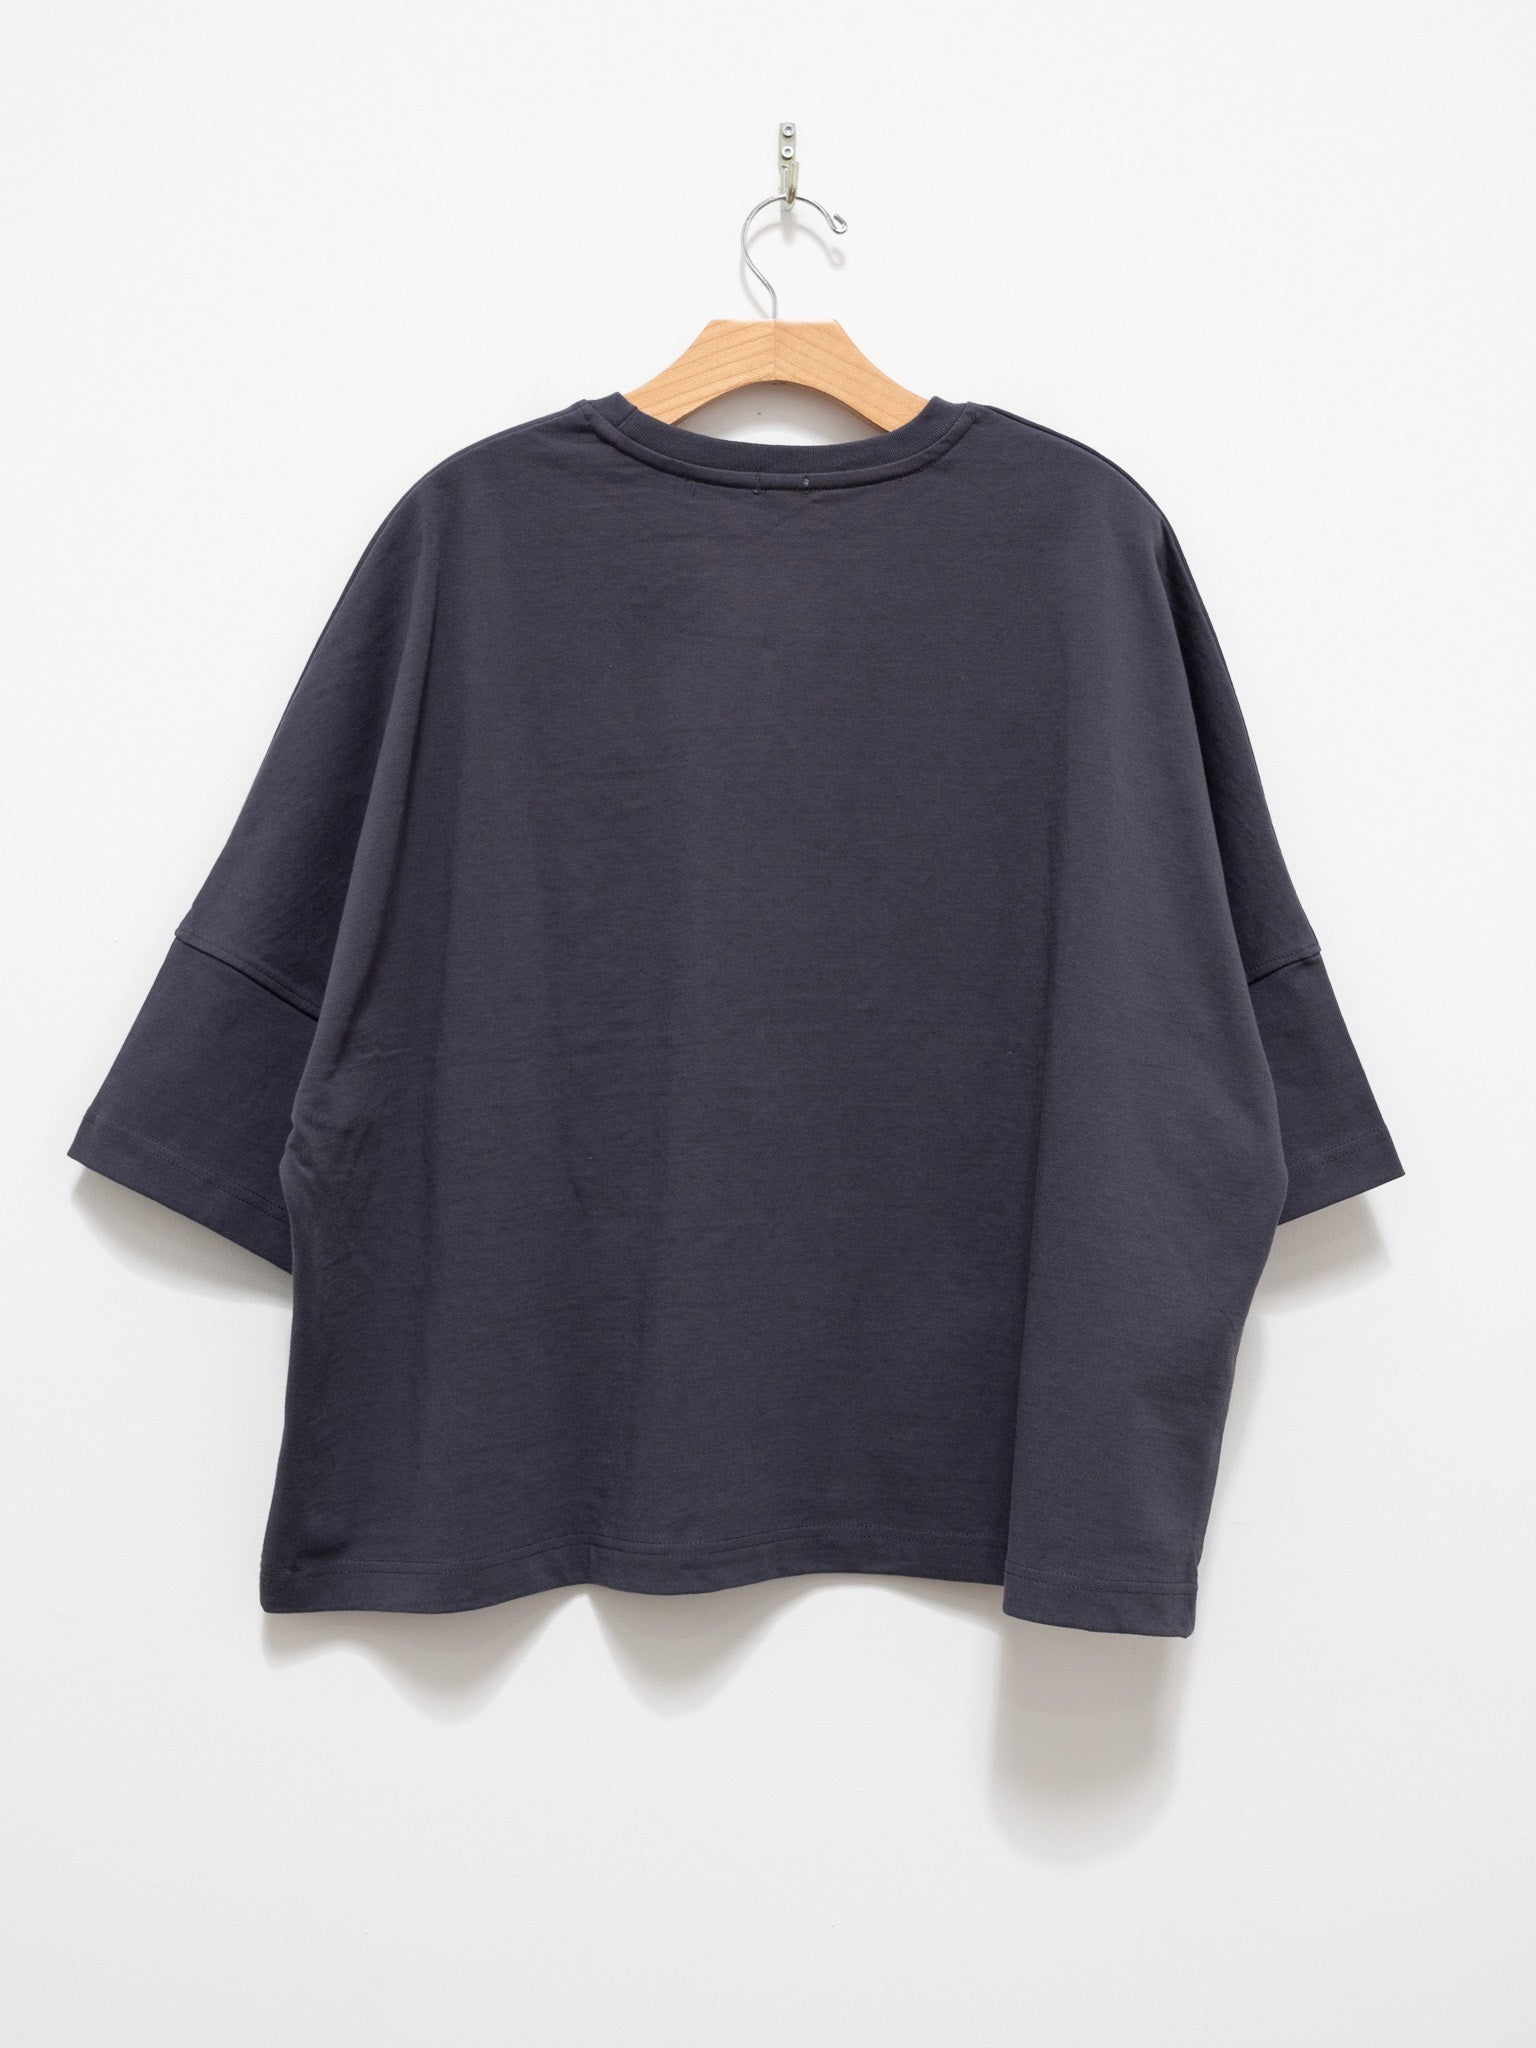 Namu Shop - ICHI Heavy Jersey Wide Pullover - Charcoal